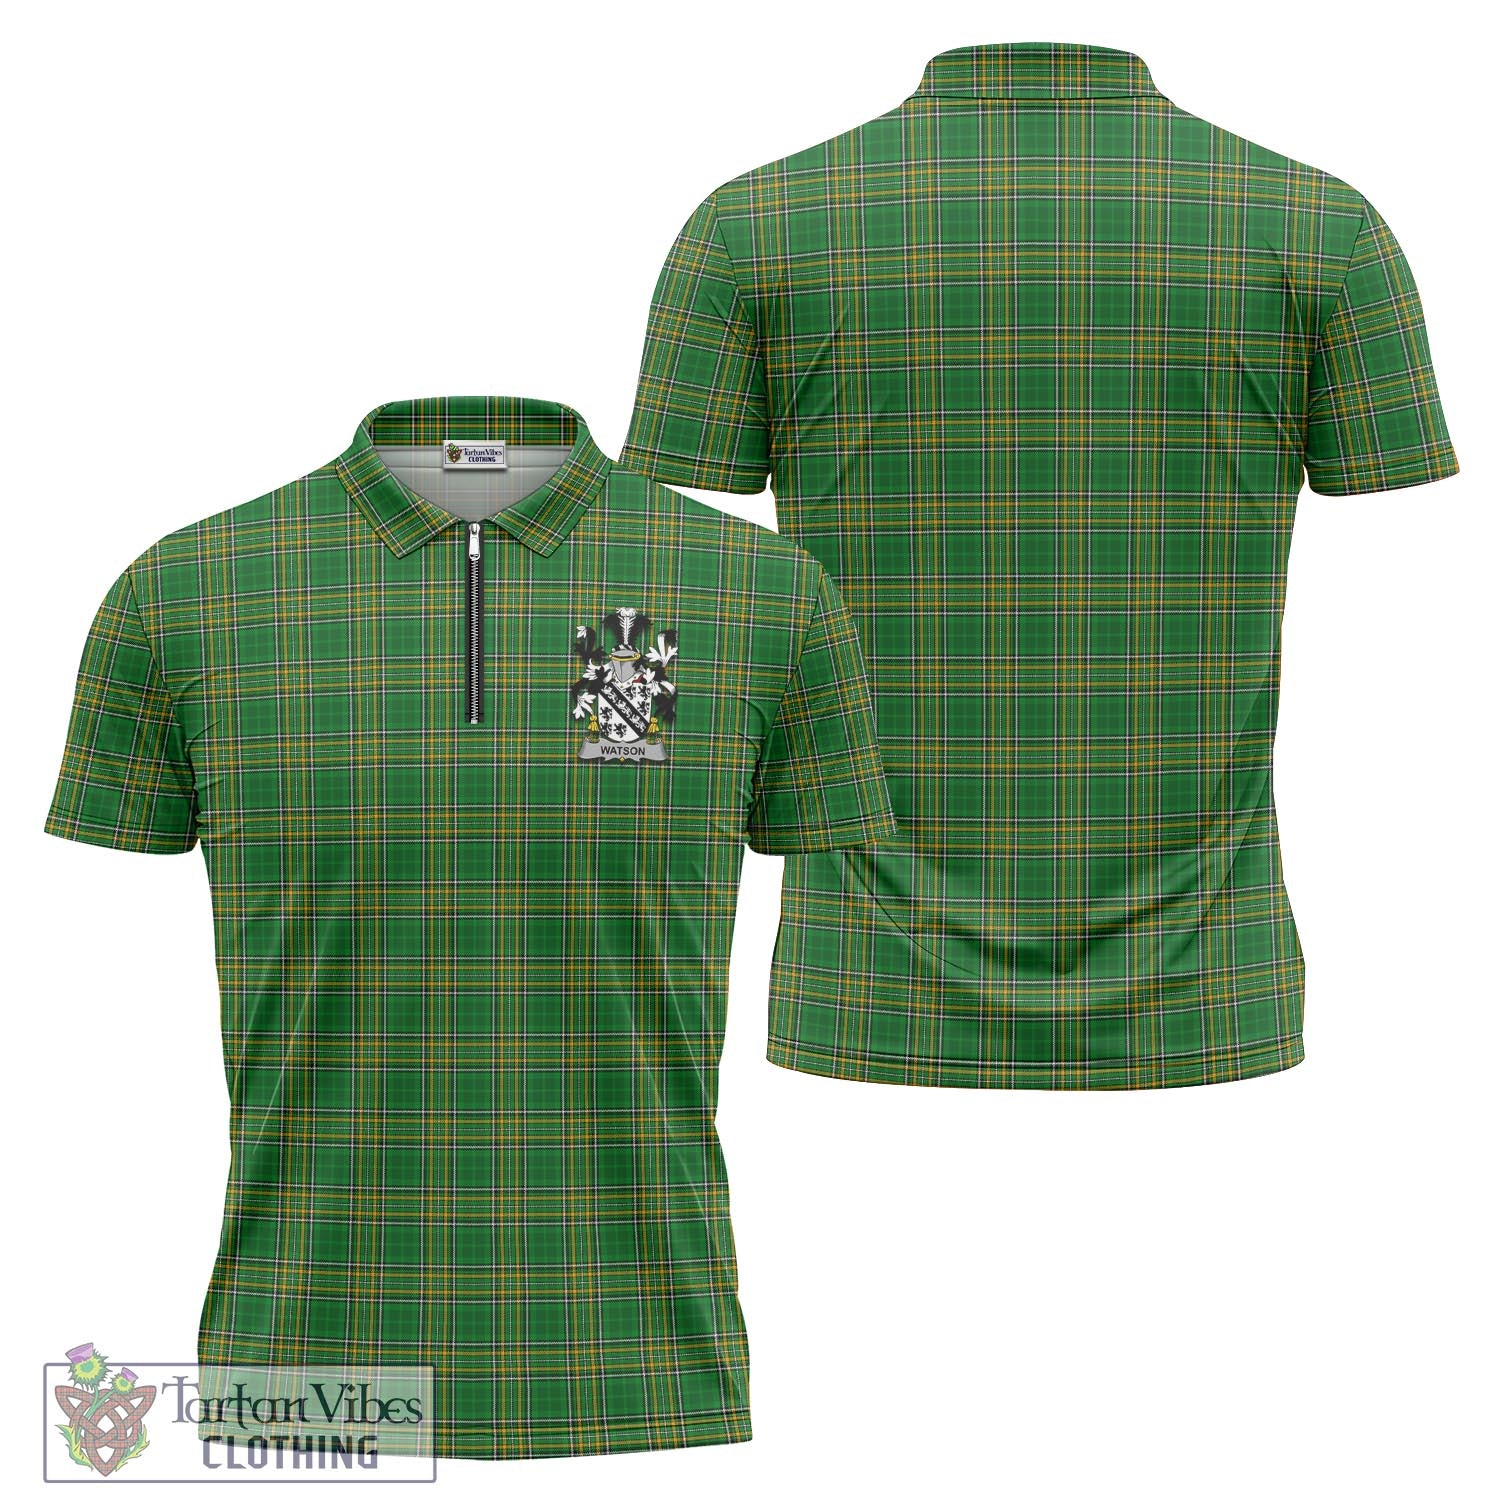 Tartan Vibes Clothing Watson Ireland Clan Tartan Zipper Polo Shirt with Coat of Arms